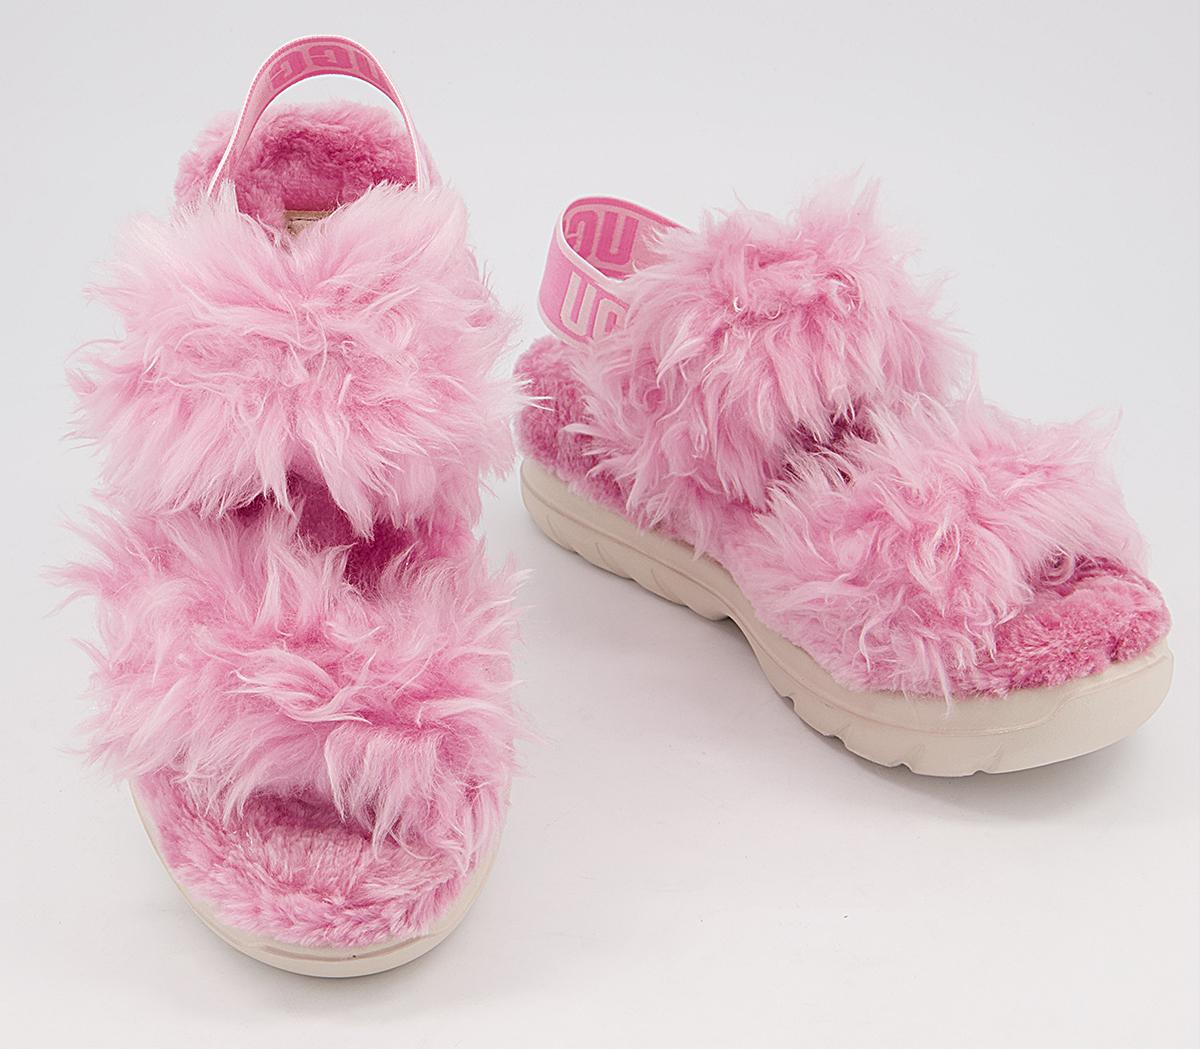 UGG Fluff Sugar Sustainable Sandals Pink - Women’s Sandals